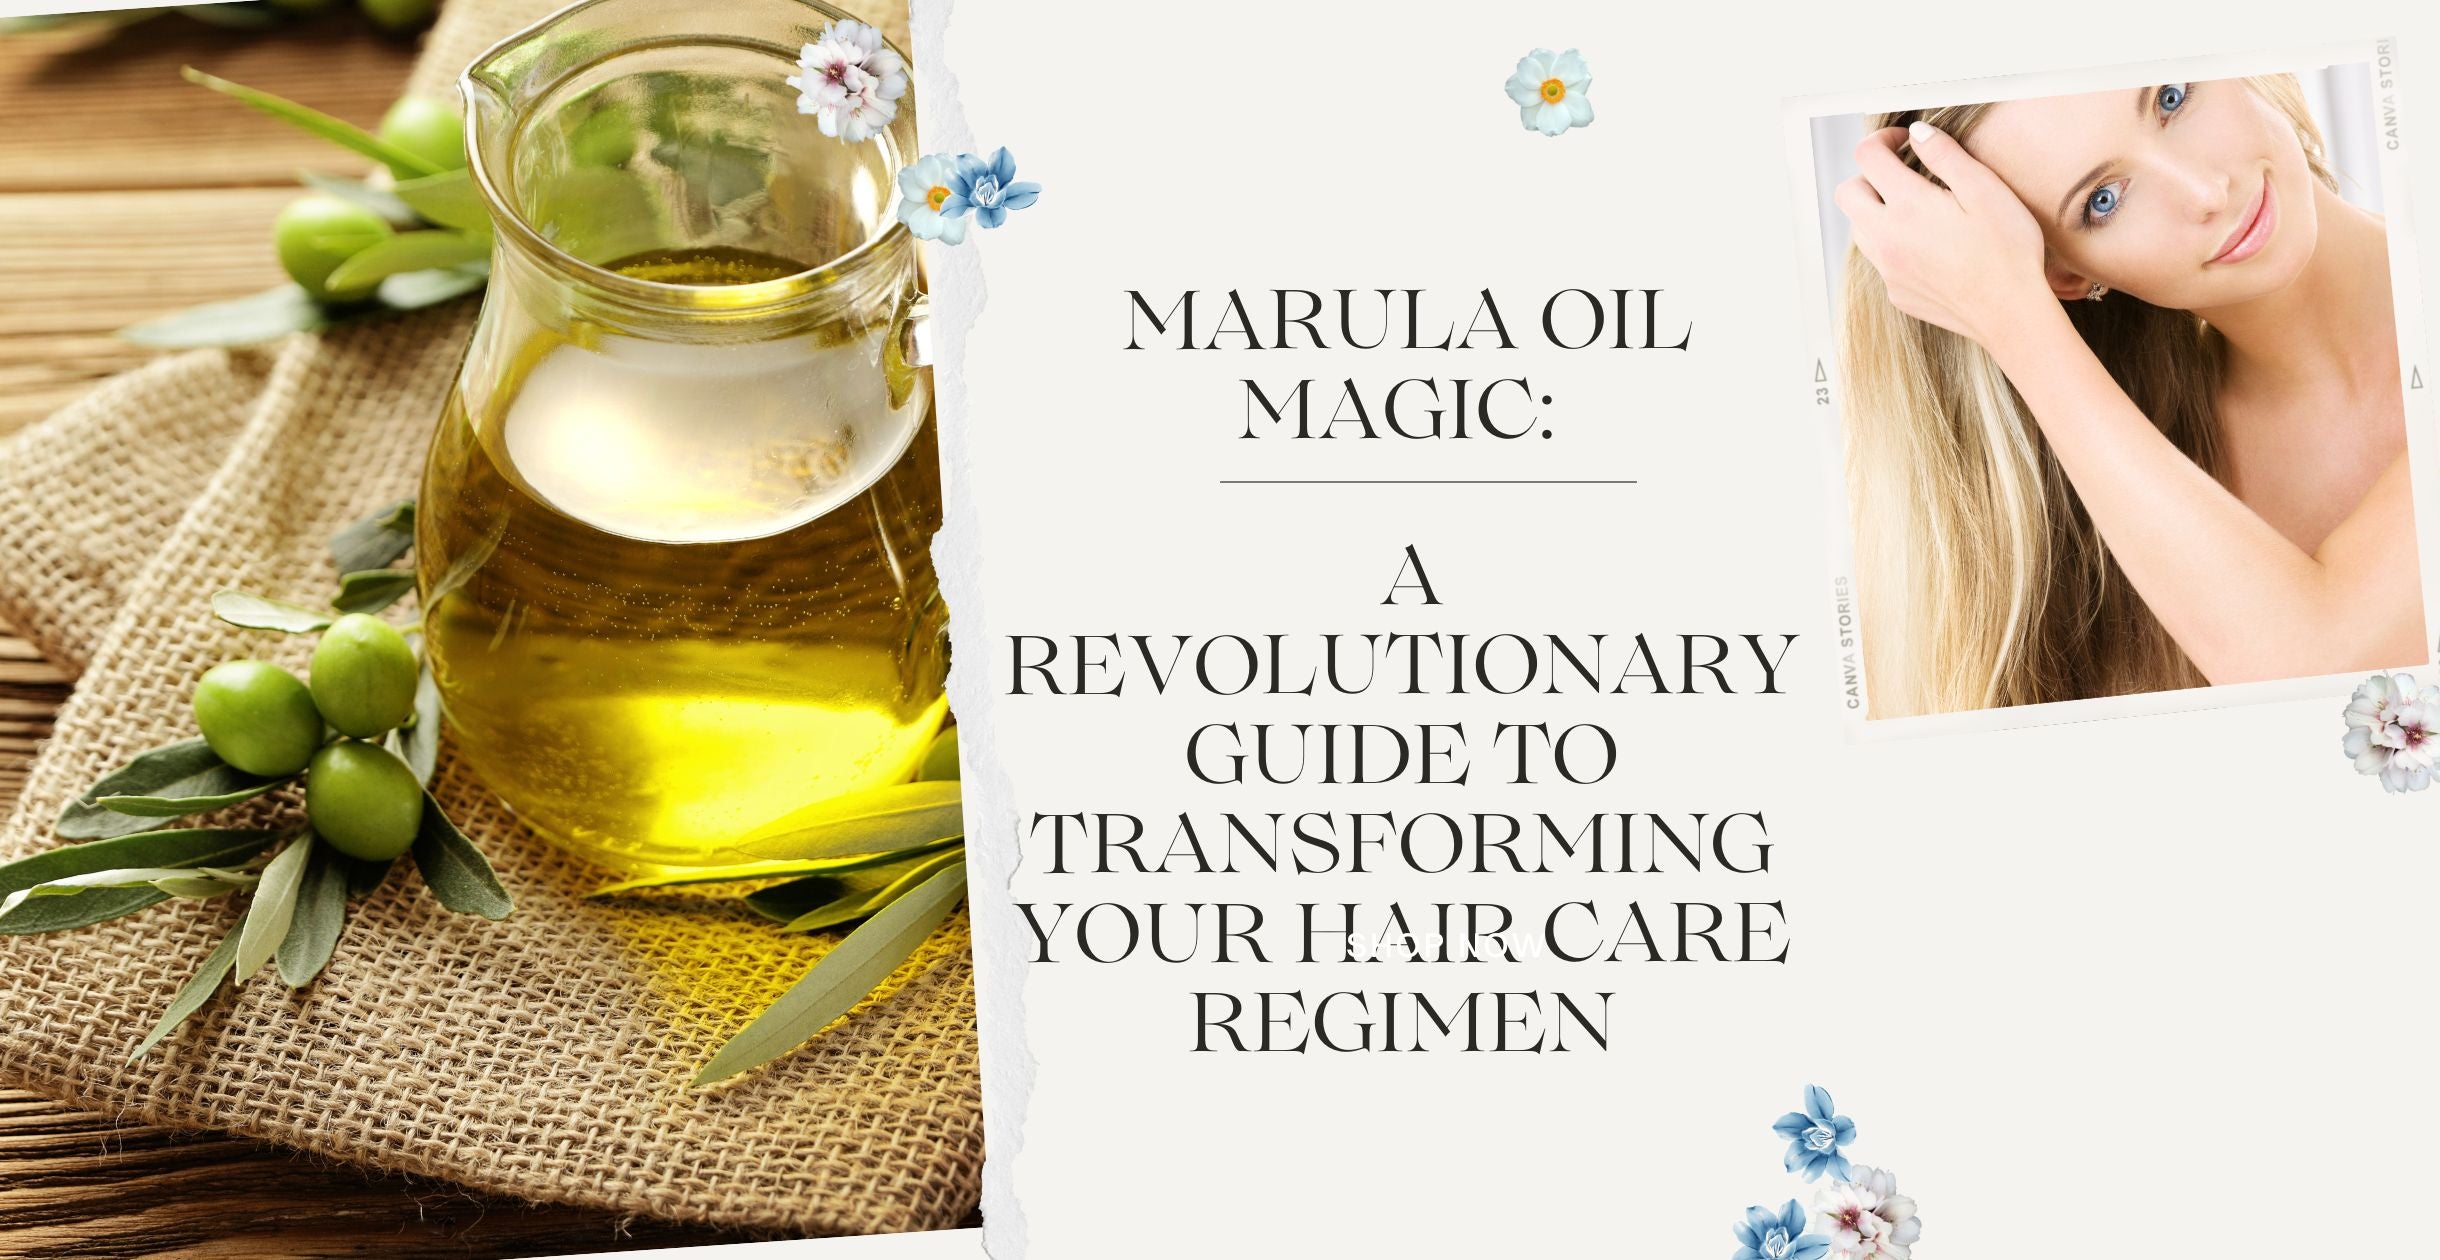 Marula Oil Magic: A Revolutionary Guide to Transforming Your Hair Care Regimen